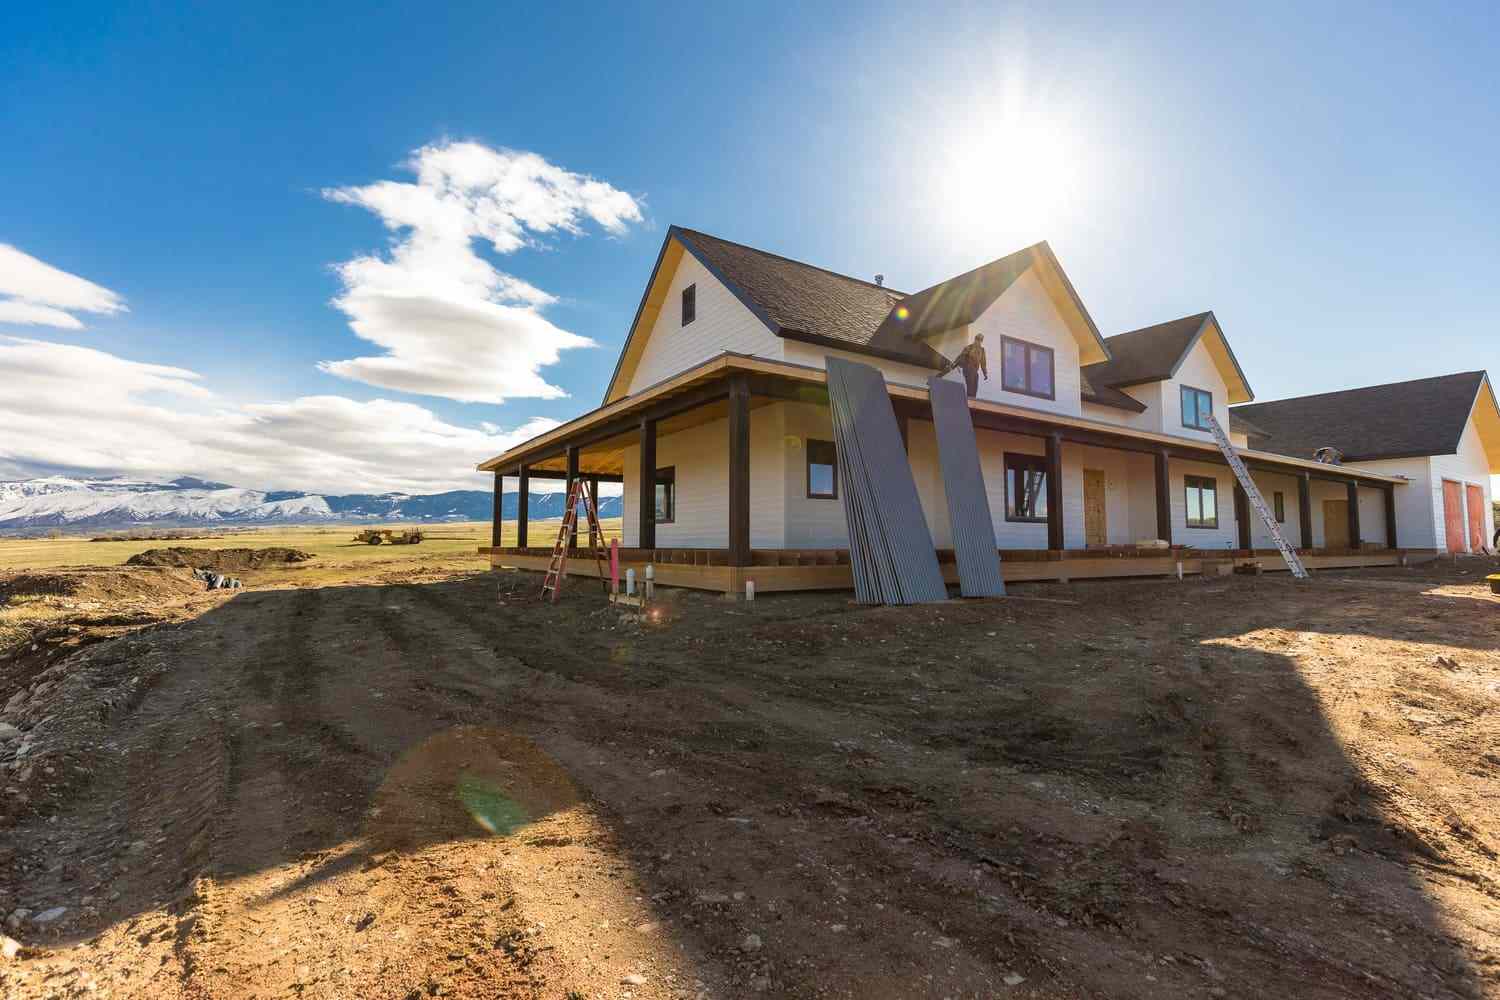 New construction exterior progress in Wyoming